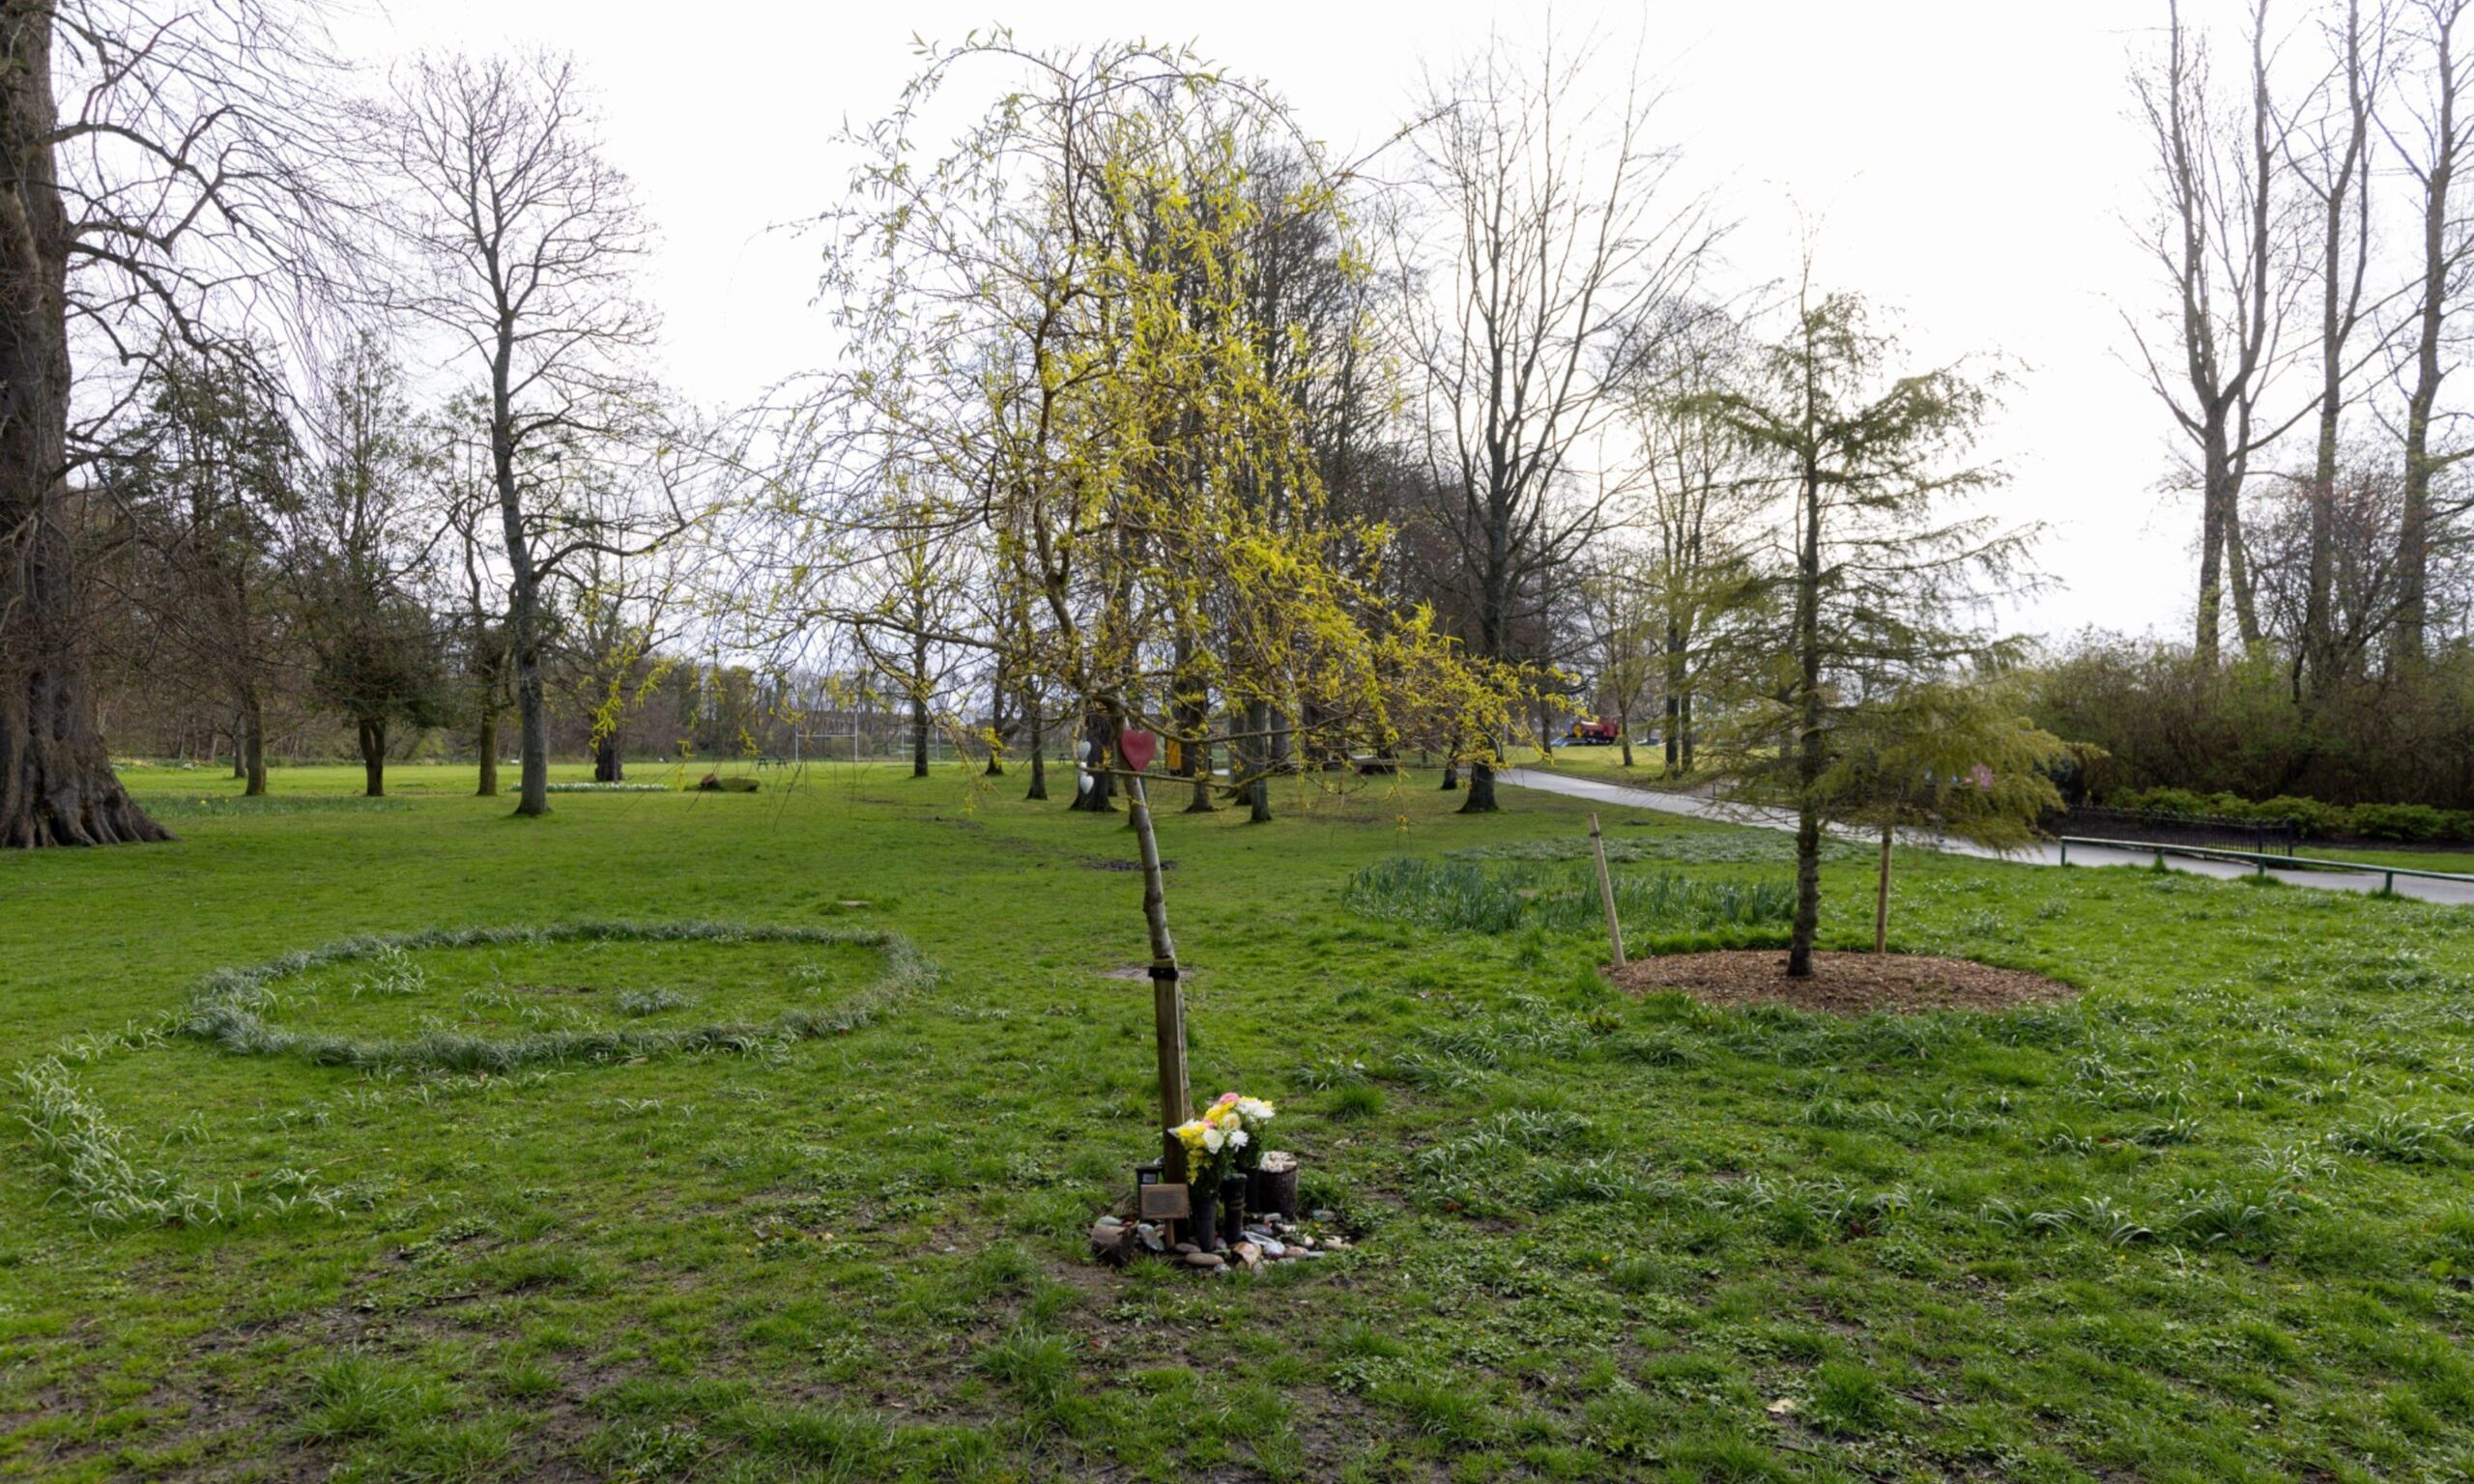 More tributes at a tree at Seaton park.